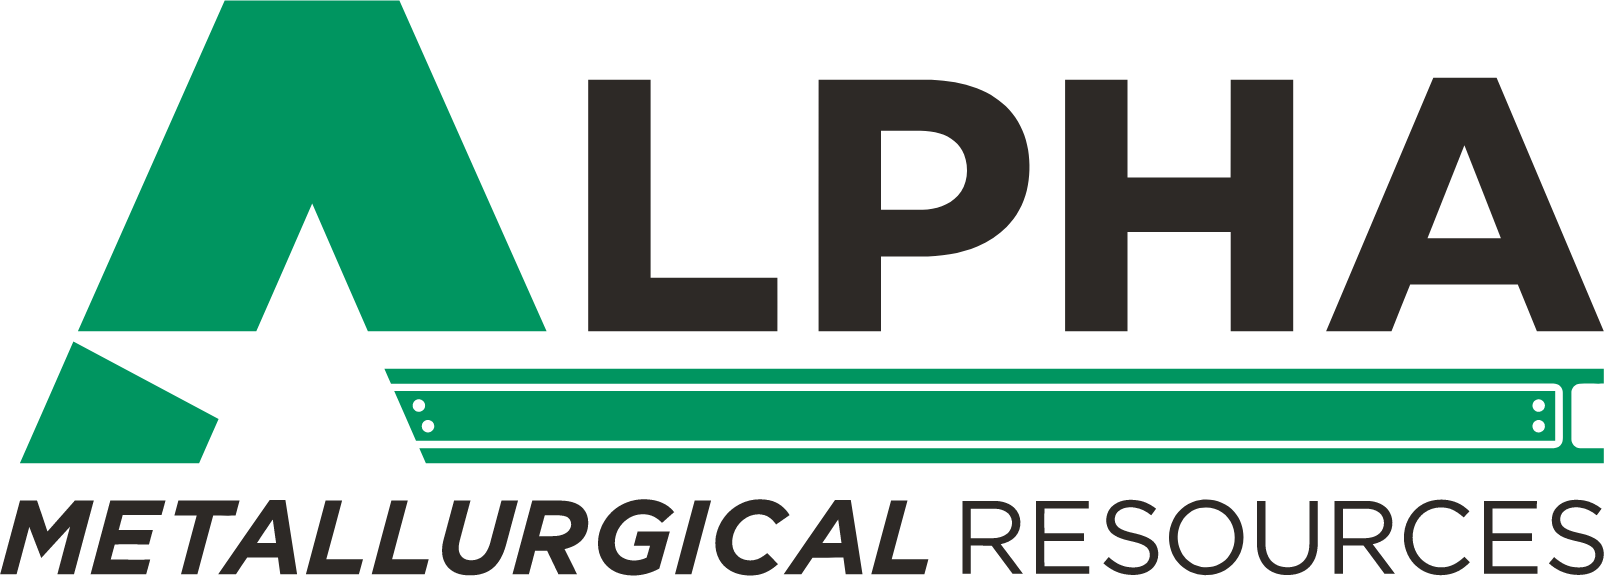 Alpha Metallurgical Resources logo large (transparent PNG)